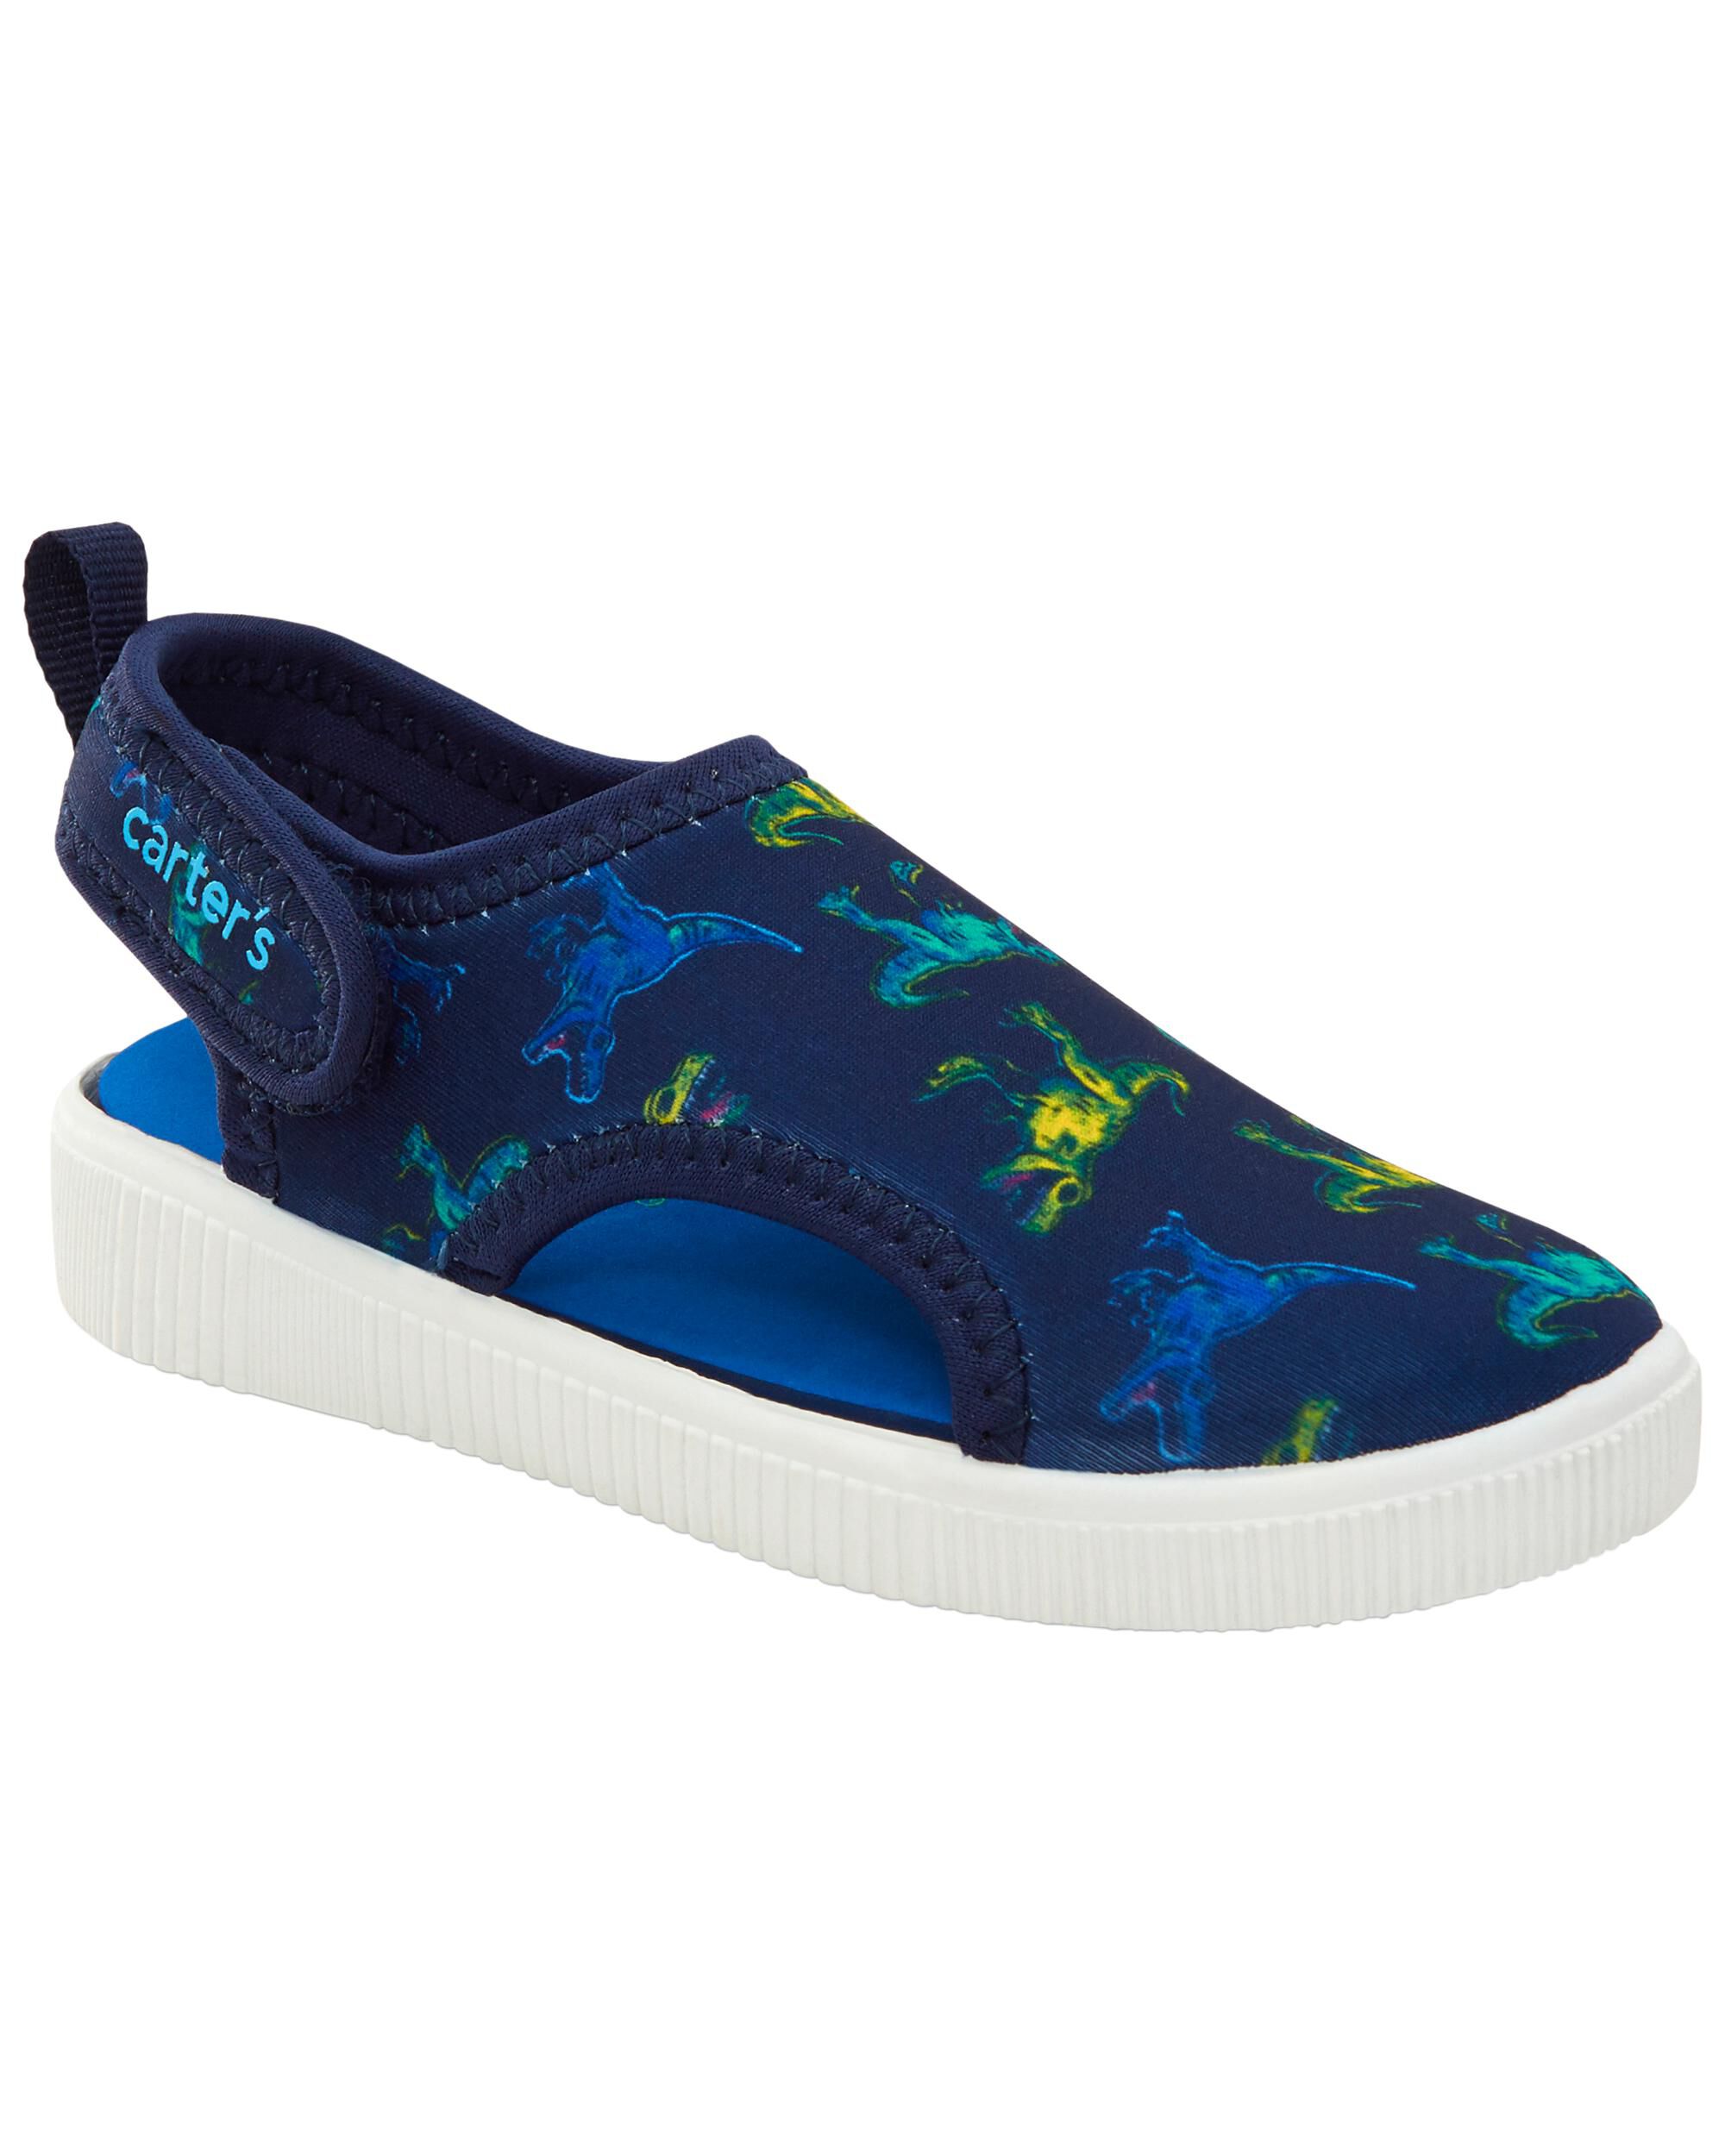 Carters Unisex-Child Troy Water Shoe Sport Sandal 